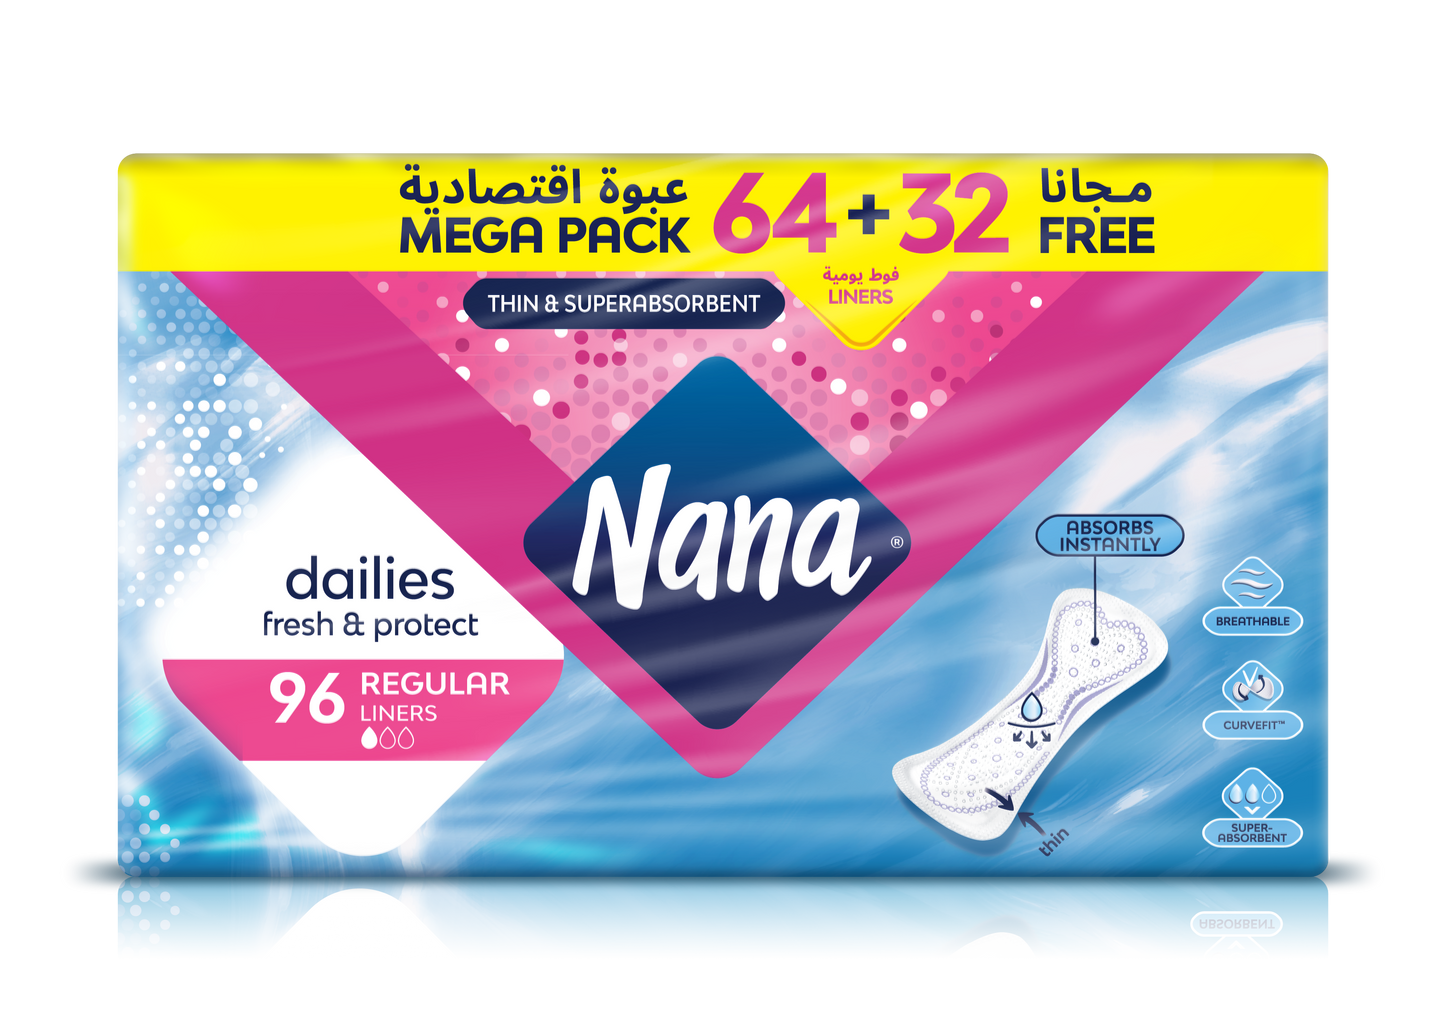 Nana Mega Pack,Thin & Superabsorbent Regular Liners 64 + 32 Free ( 96 Liners)